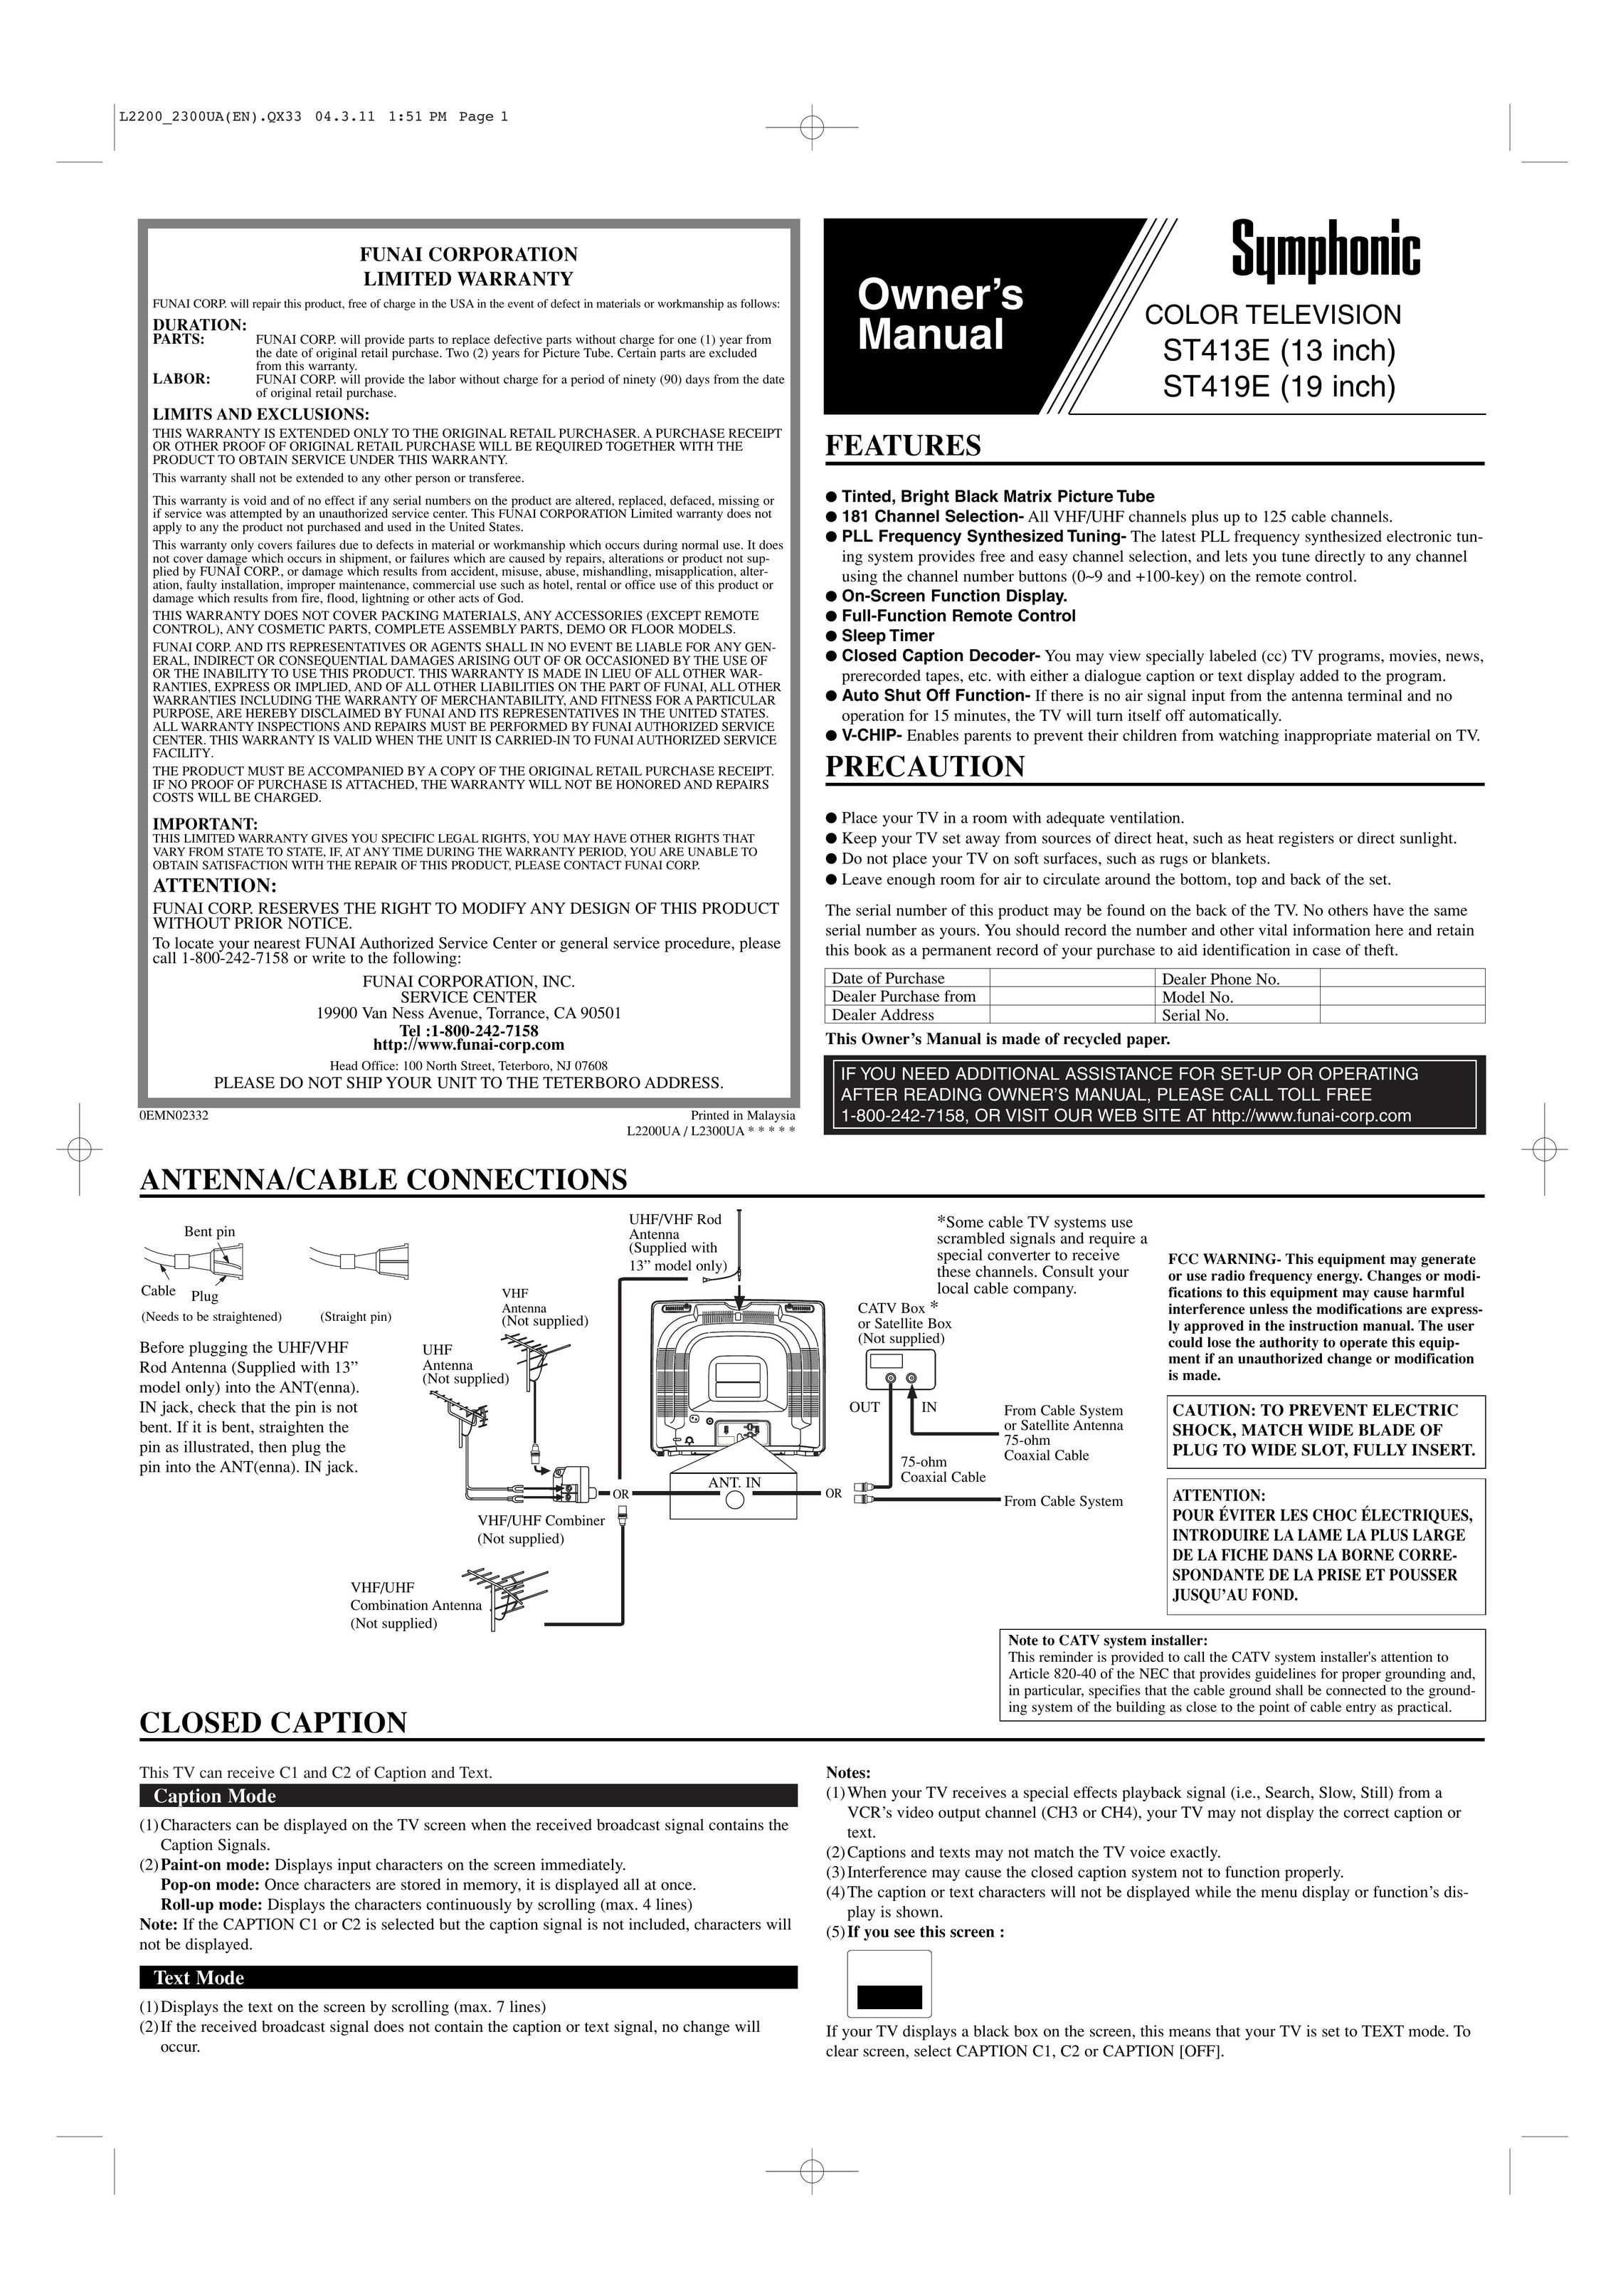 Symphonic ST419E CRT Television User Manual